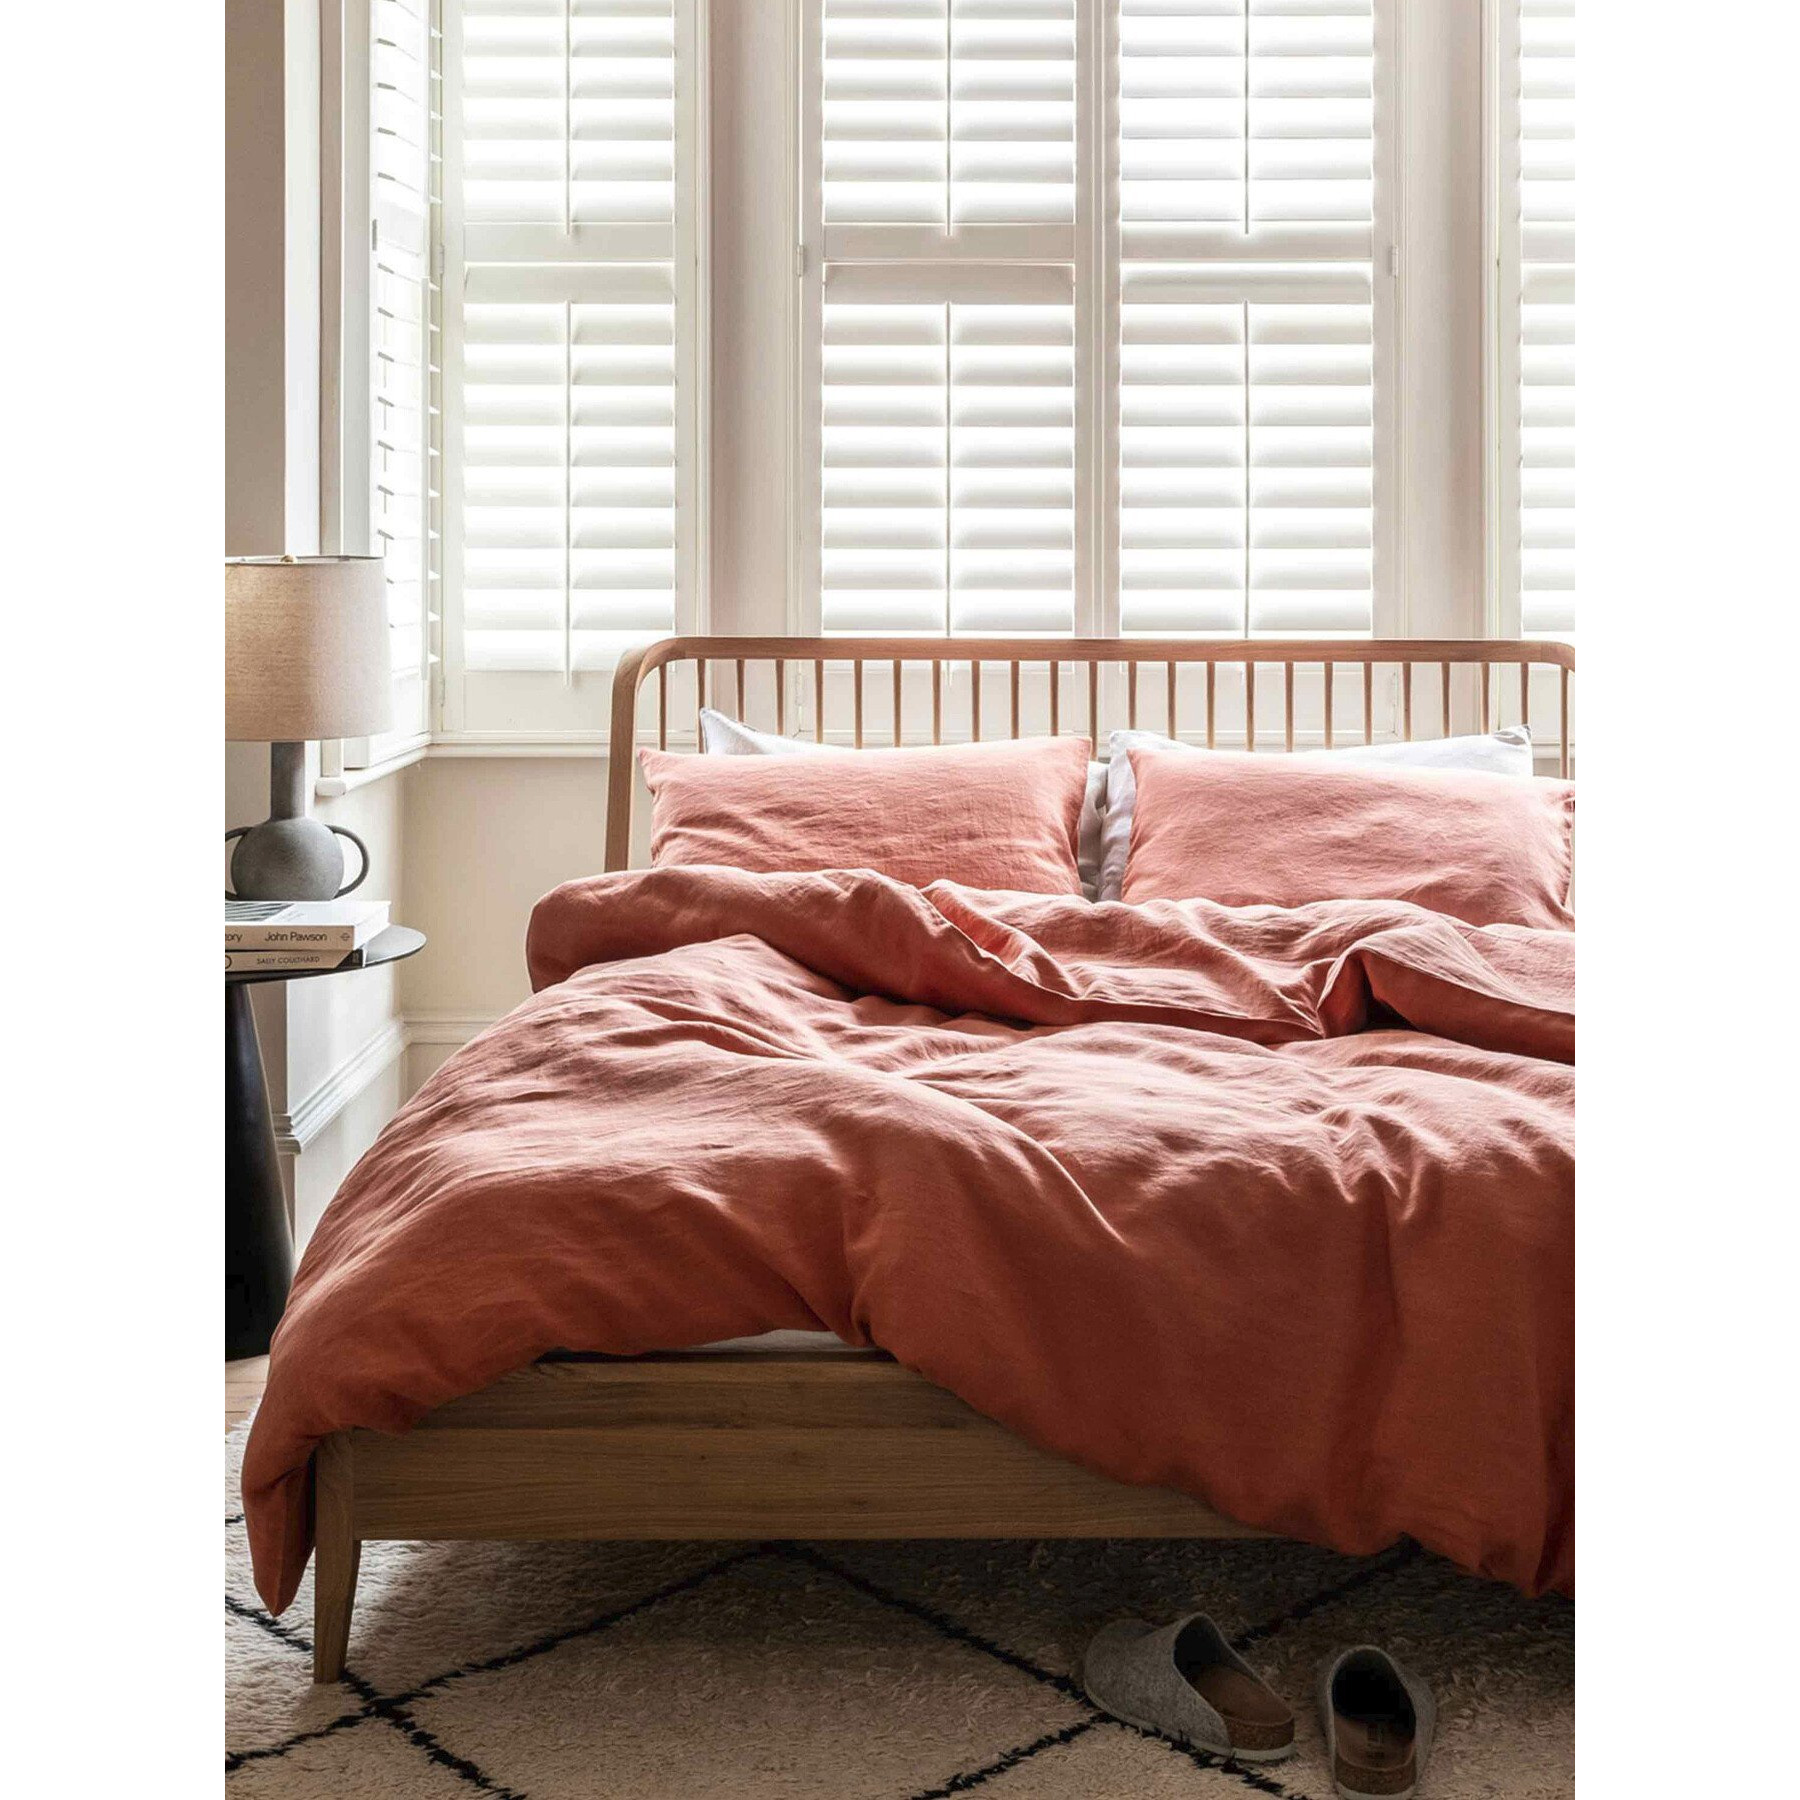 Piglet in Bed Linen Flat Sheet - Size King Orange - image 1